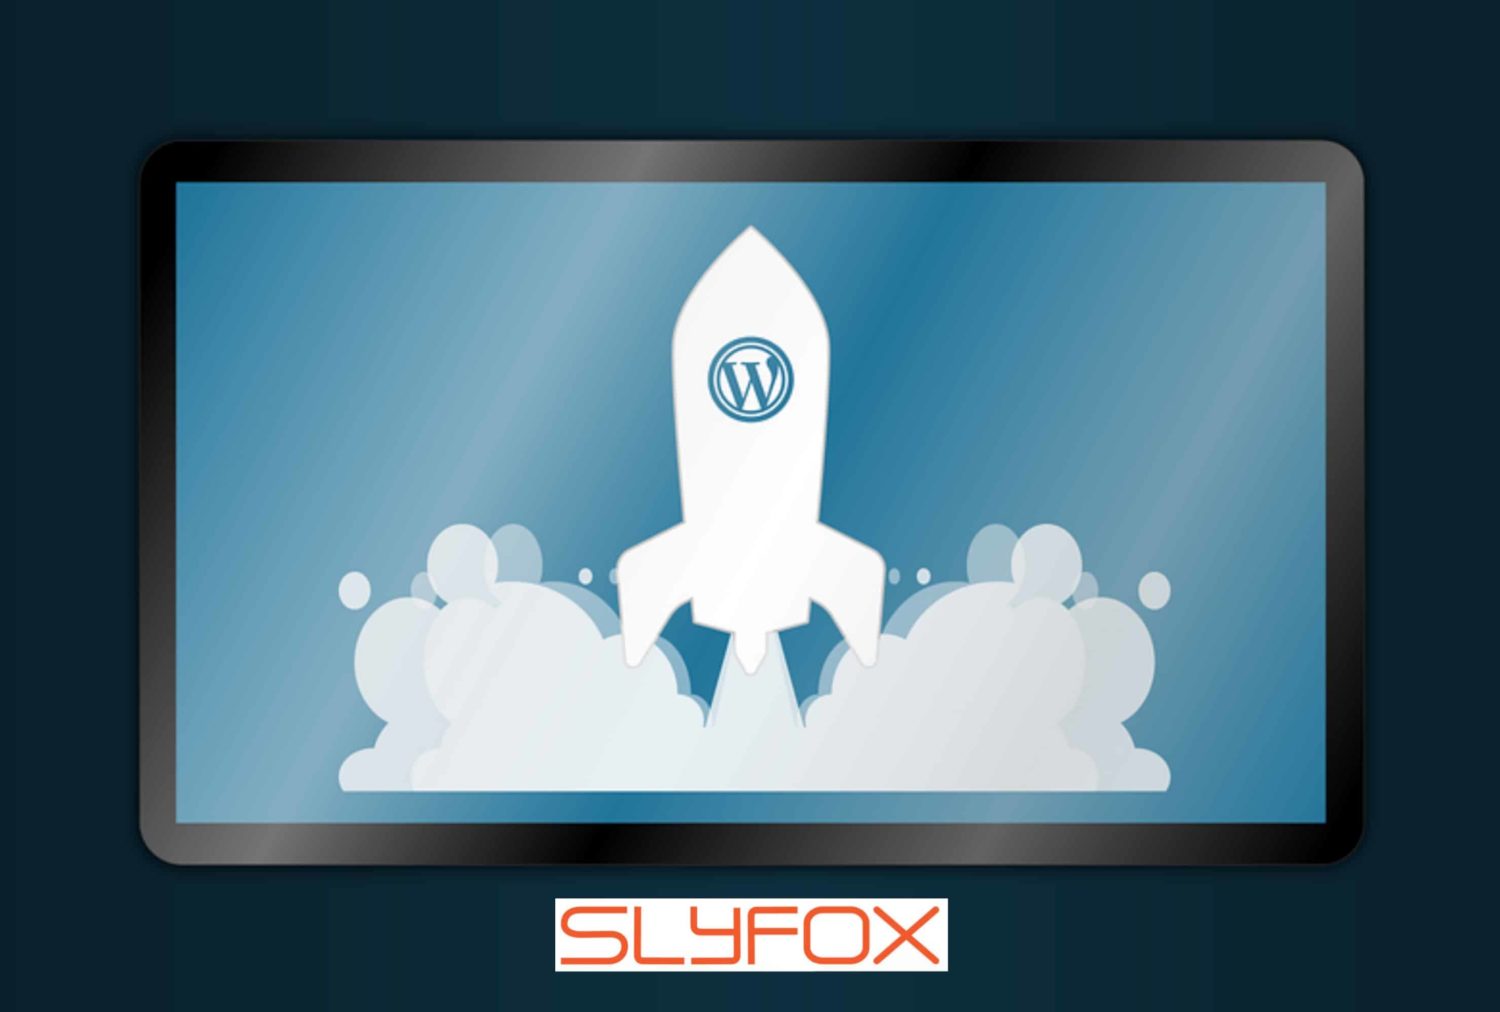 wordpress seo - SlyFox Web Design and Marketing